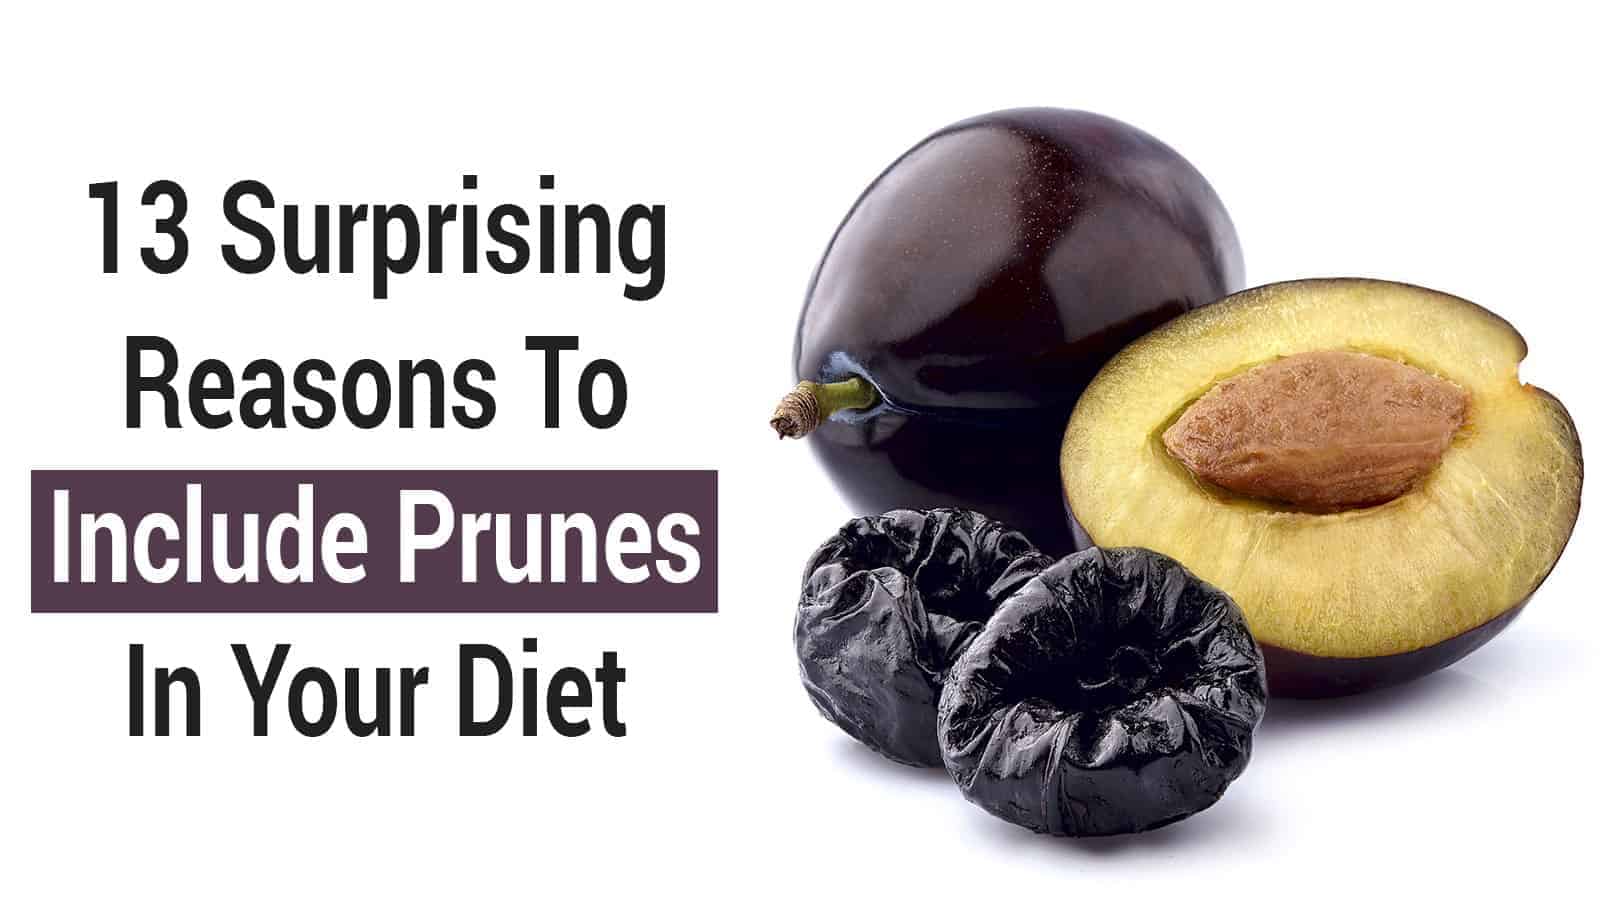 13 Surprising Reasons To Include Prunes In Your Diet